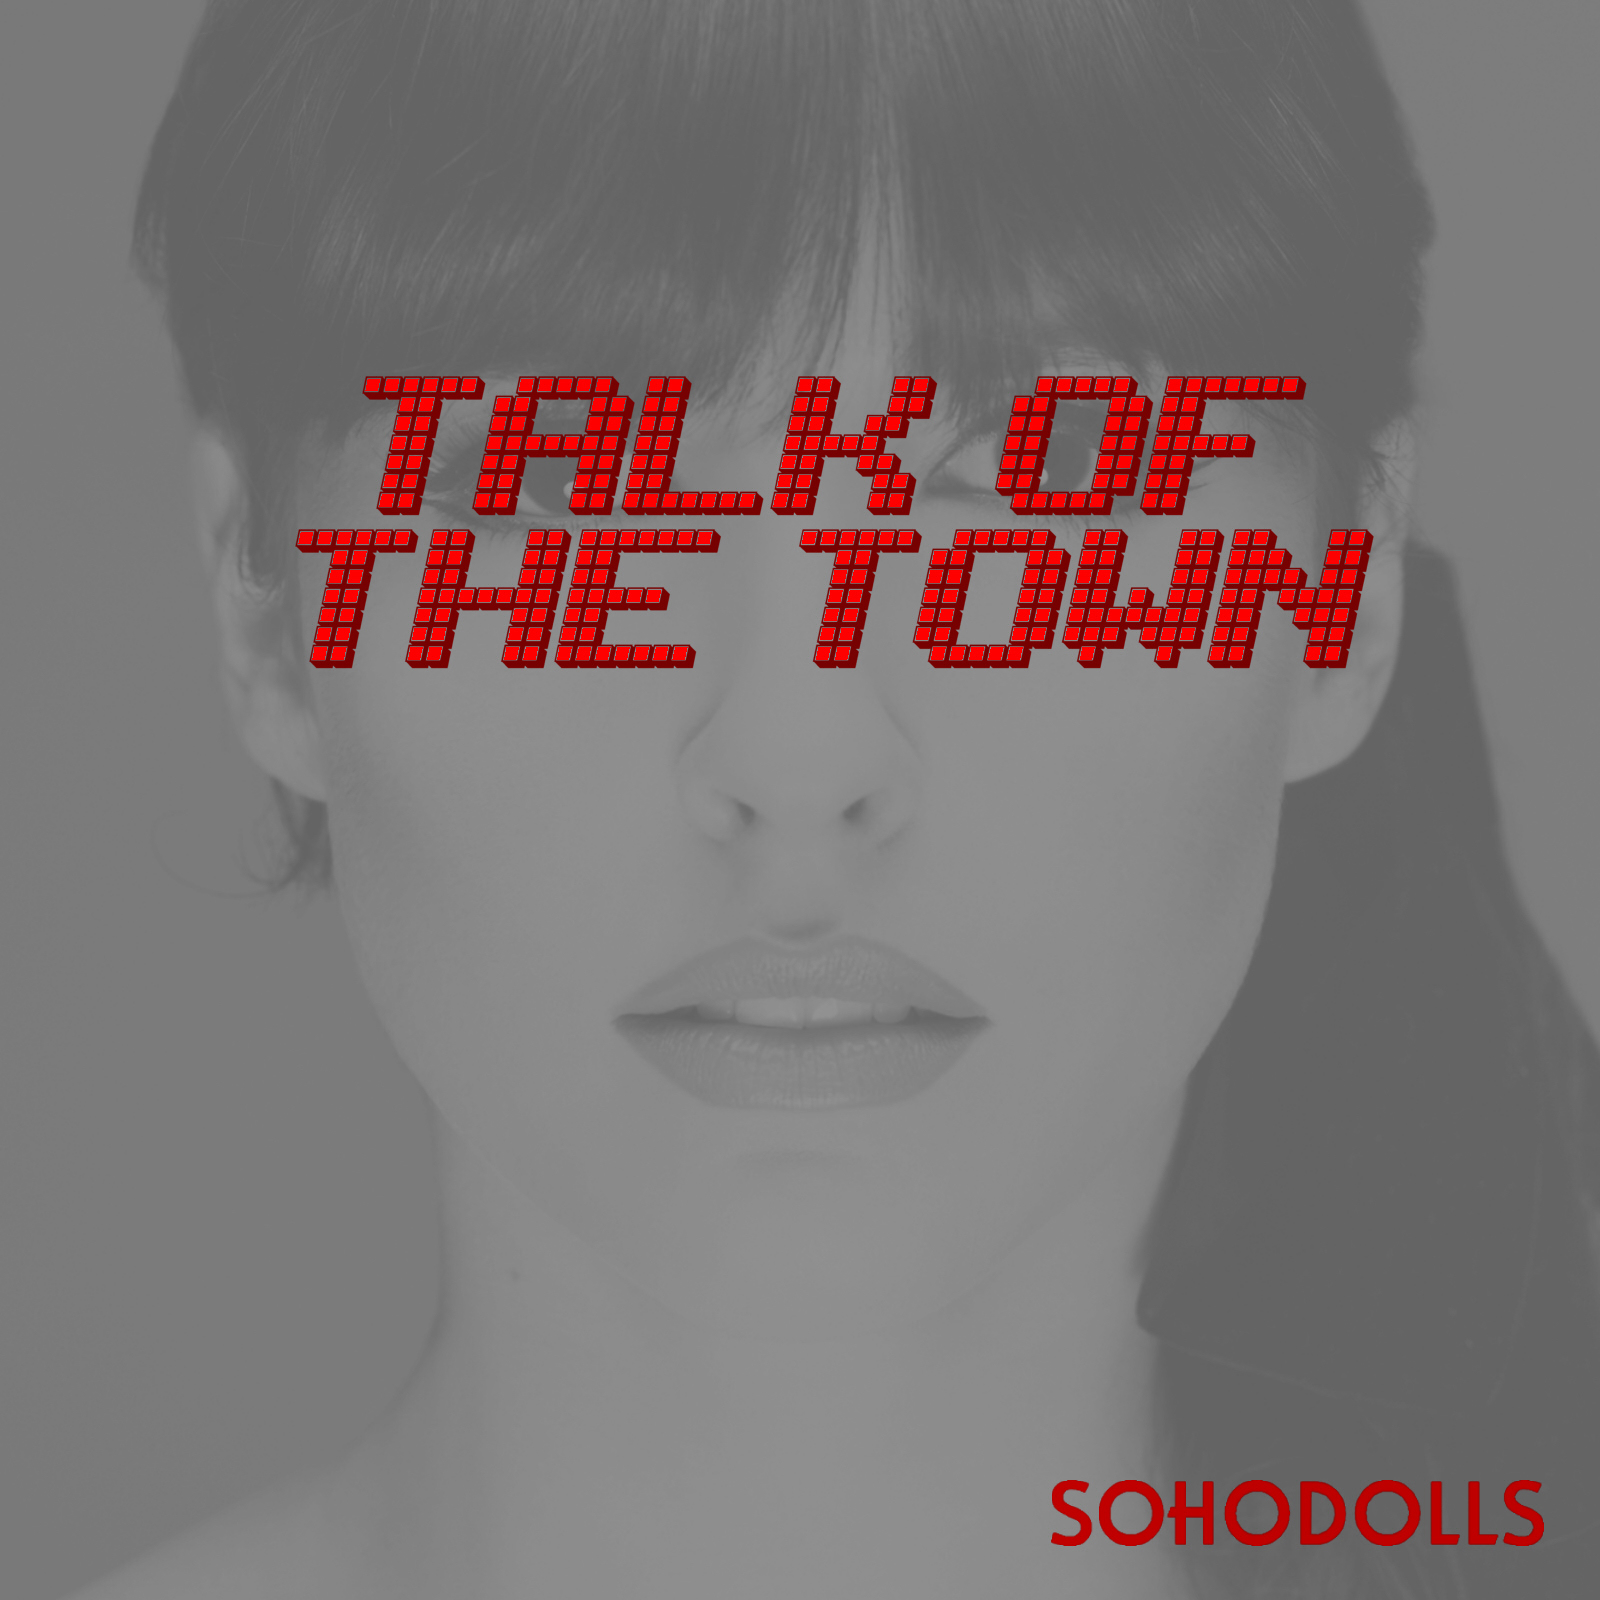 डाउनलोड करा Talk Of The Town